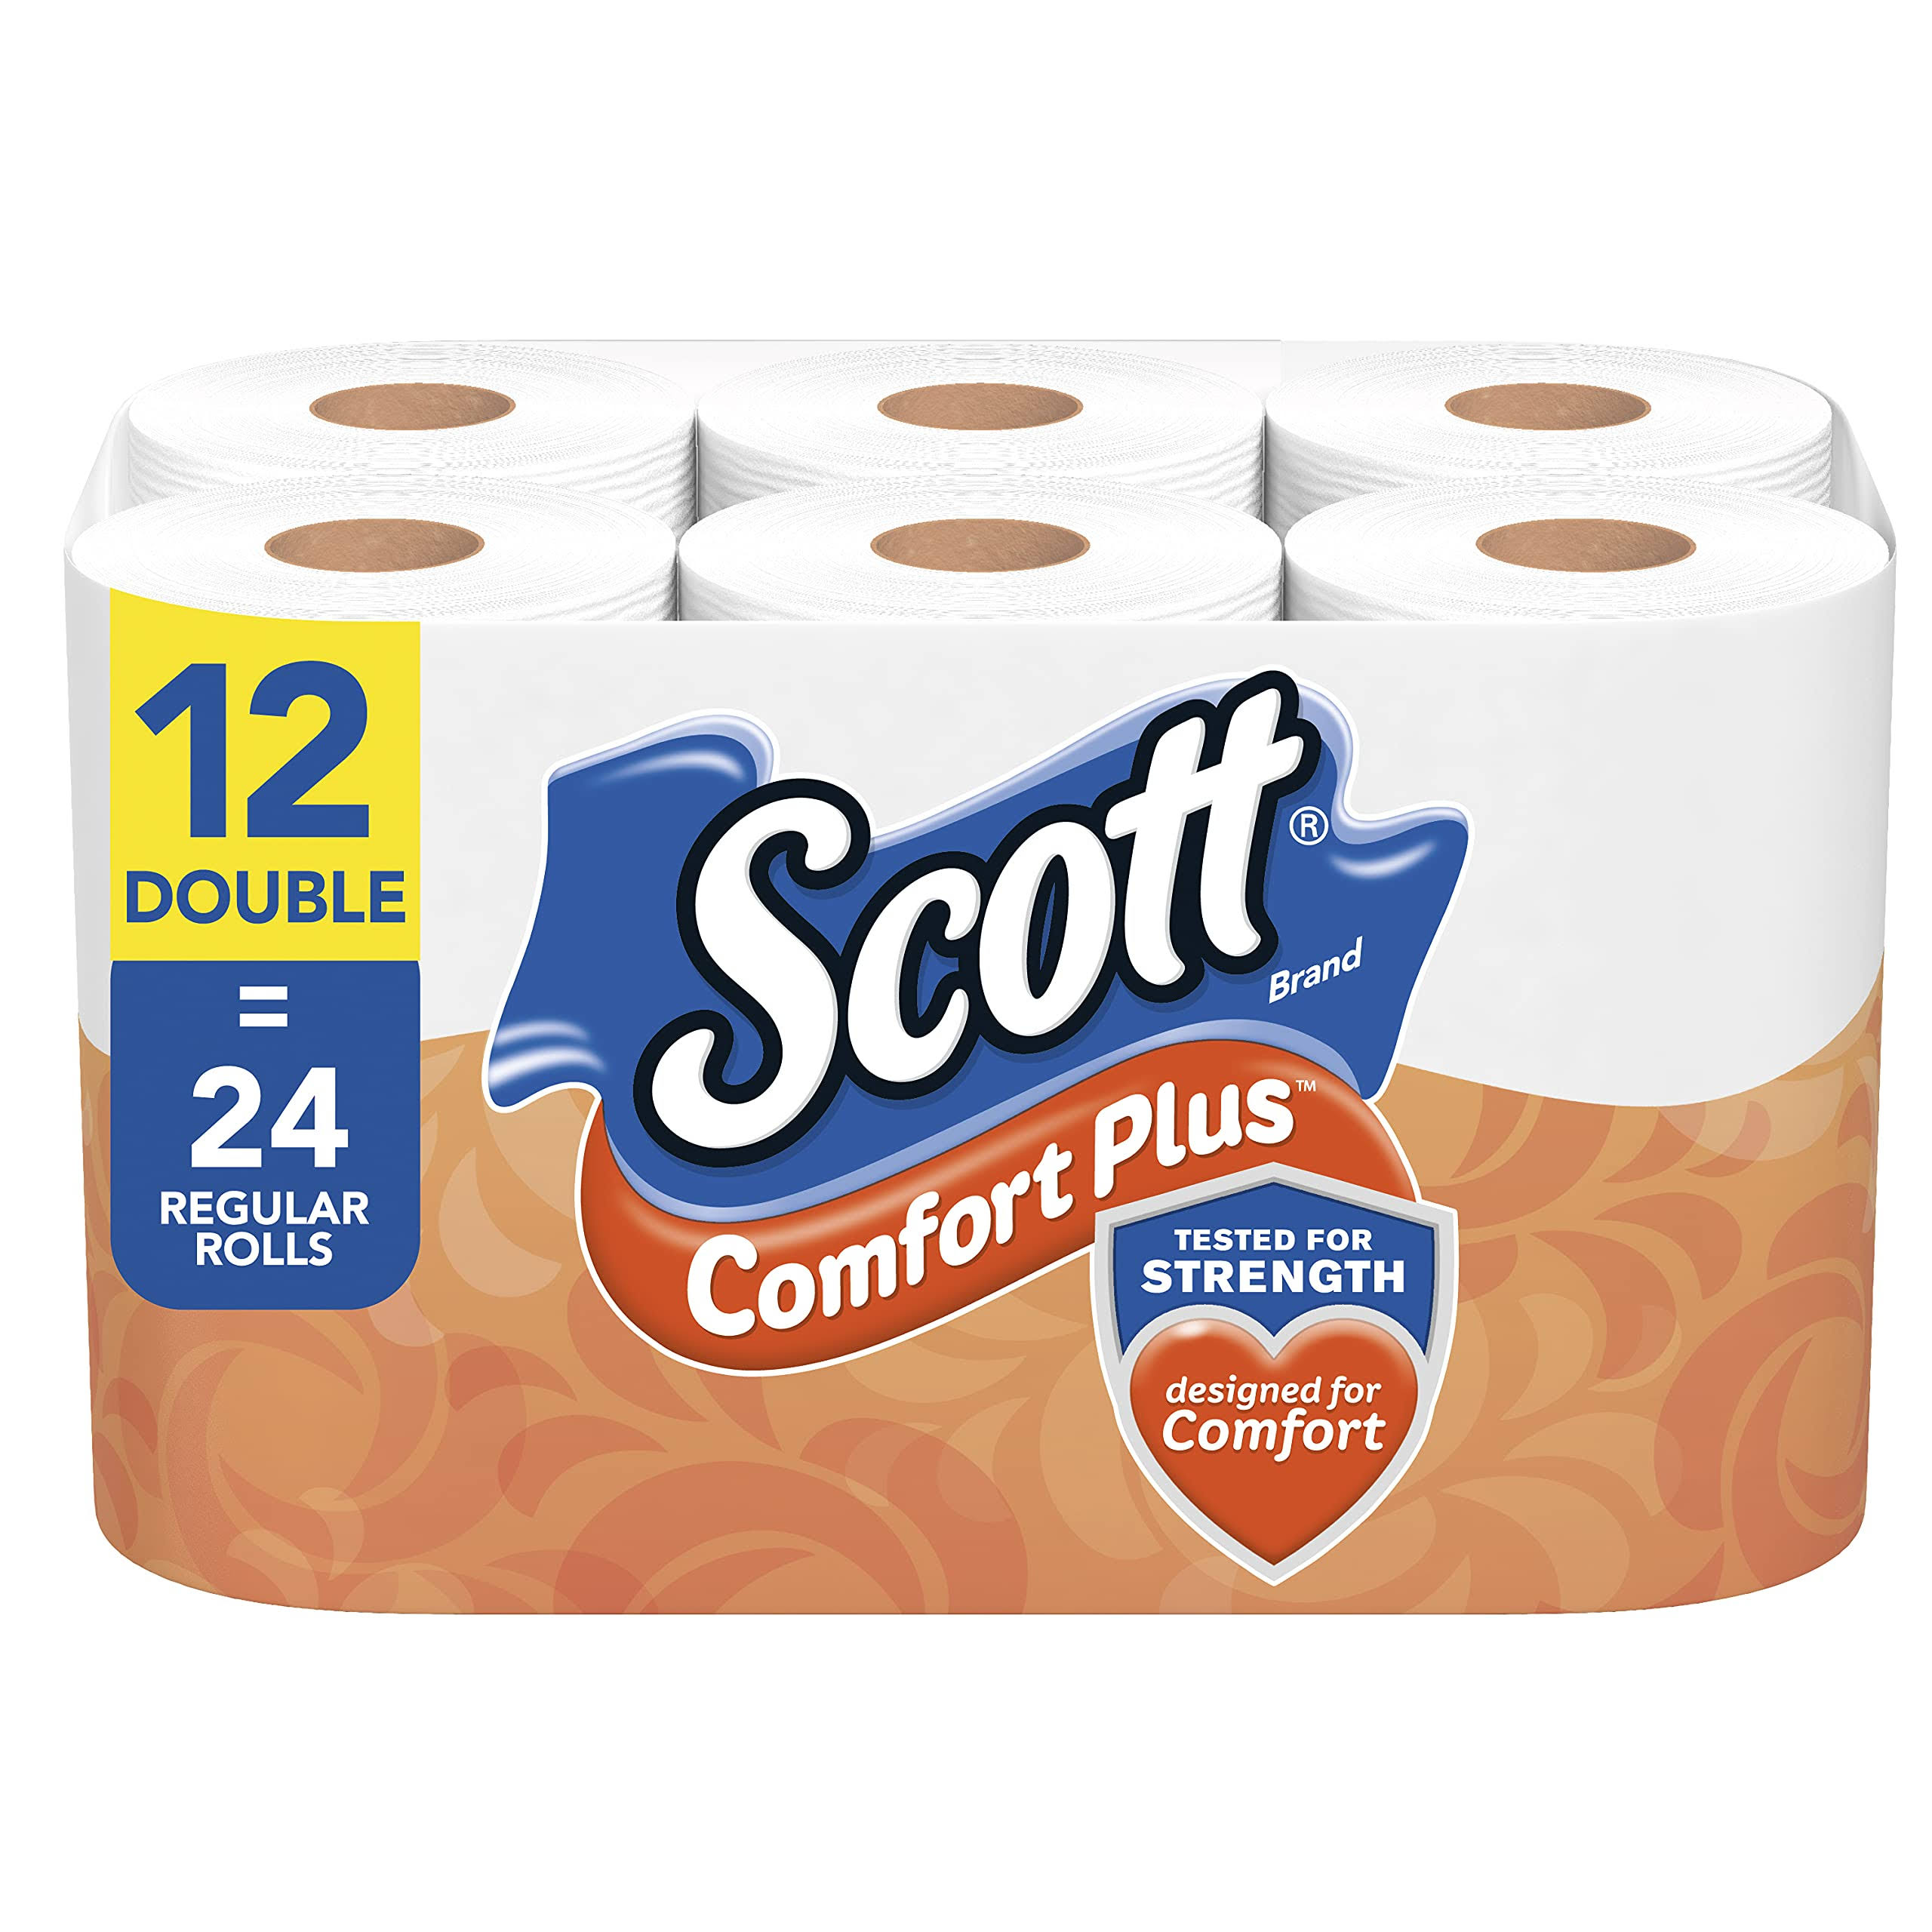 Scott ComfortPlus Bath Tissue, Double Roll -- 12 Rolls